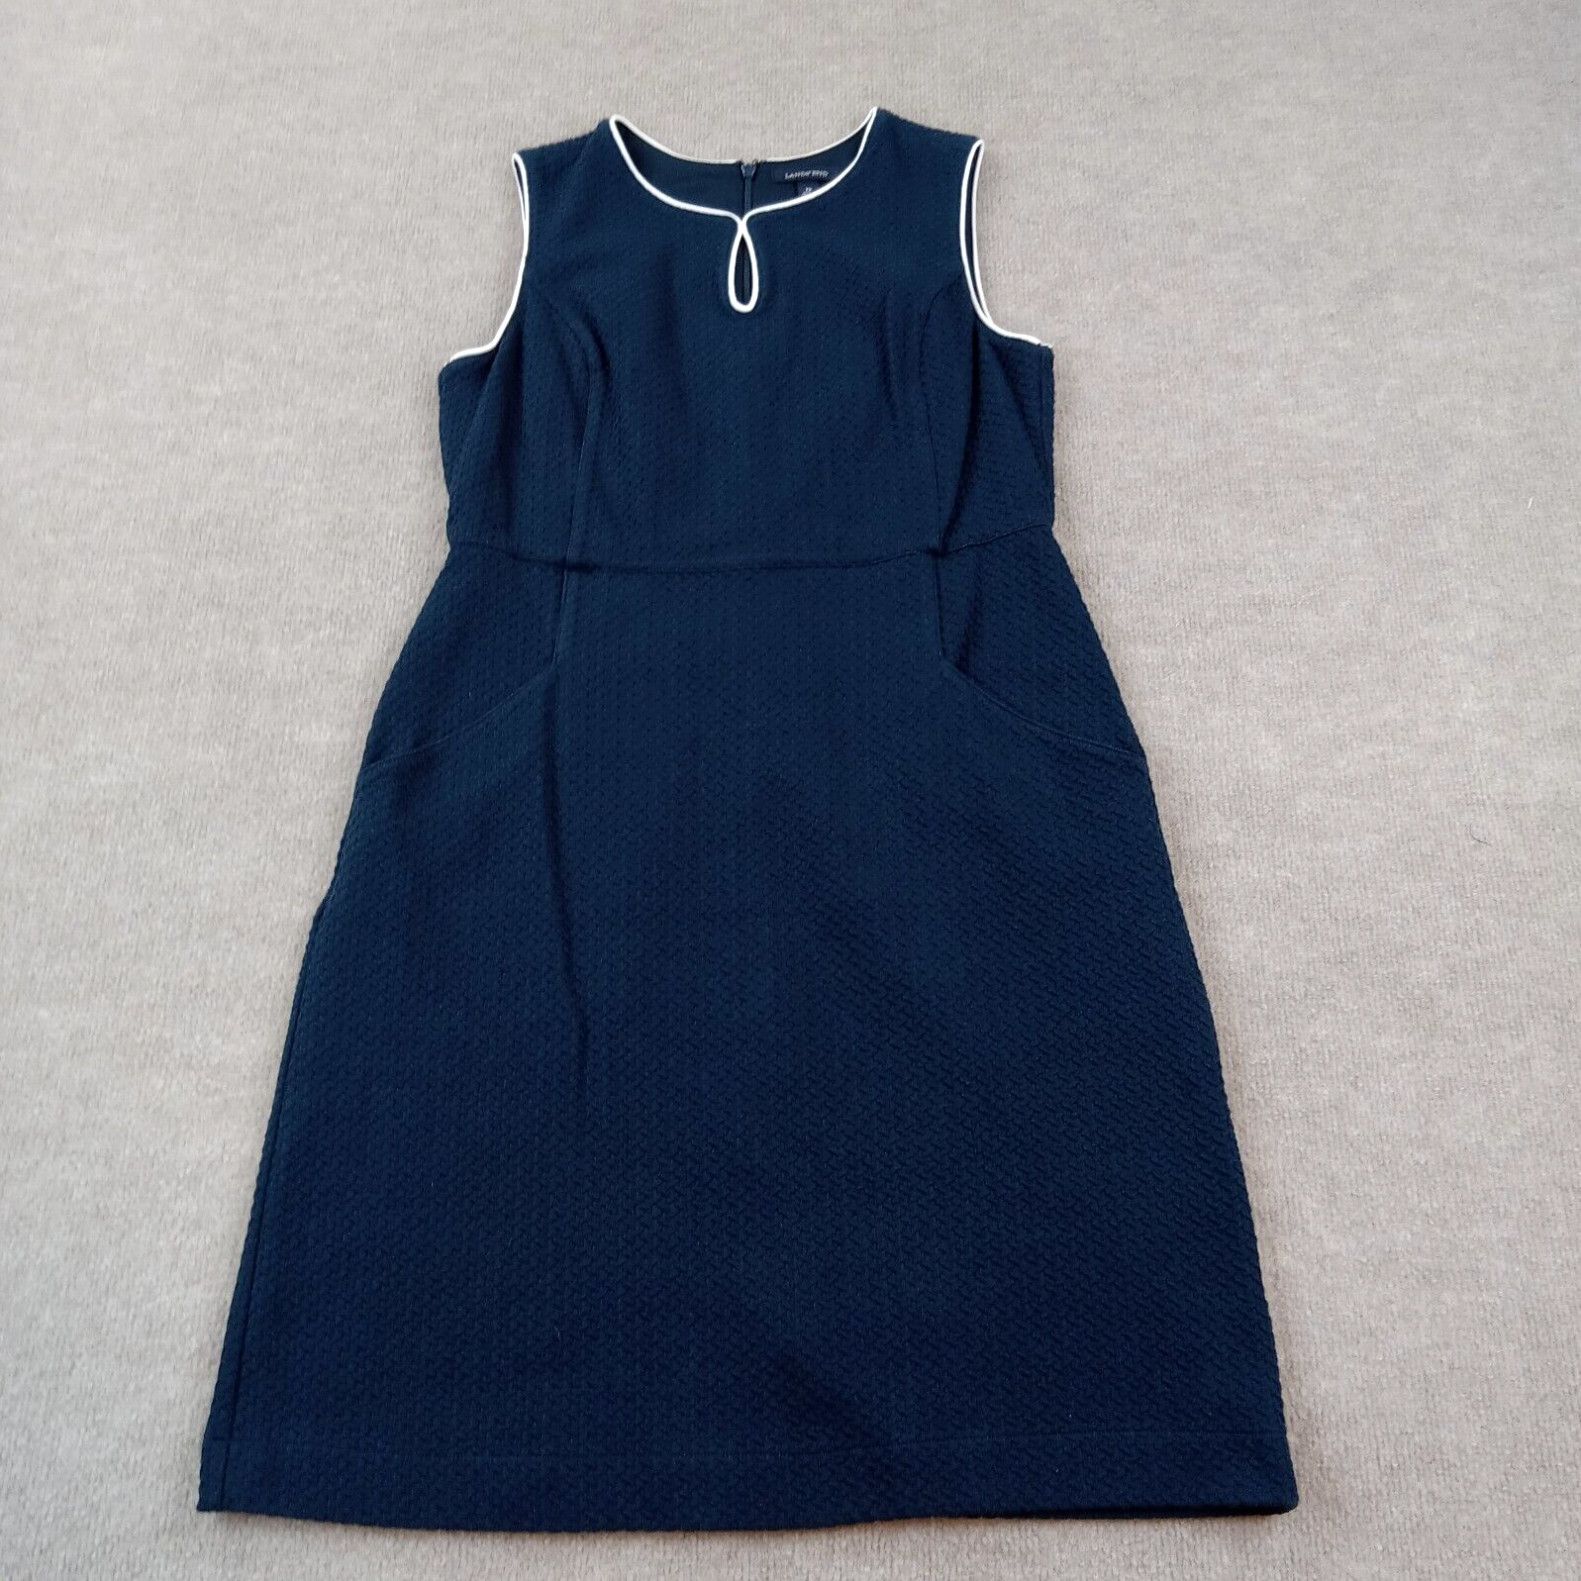 Vintage Lands Ends Dress Women Size 12 Blue Shift Short Sleeve Stretch Casual Size XL / US 12-14 / IT 48-50 - 1 Preview